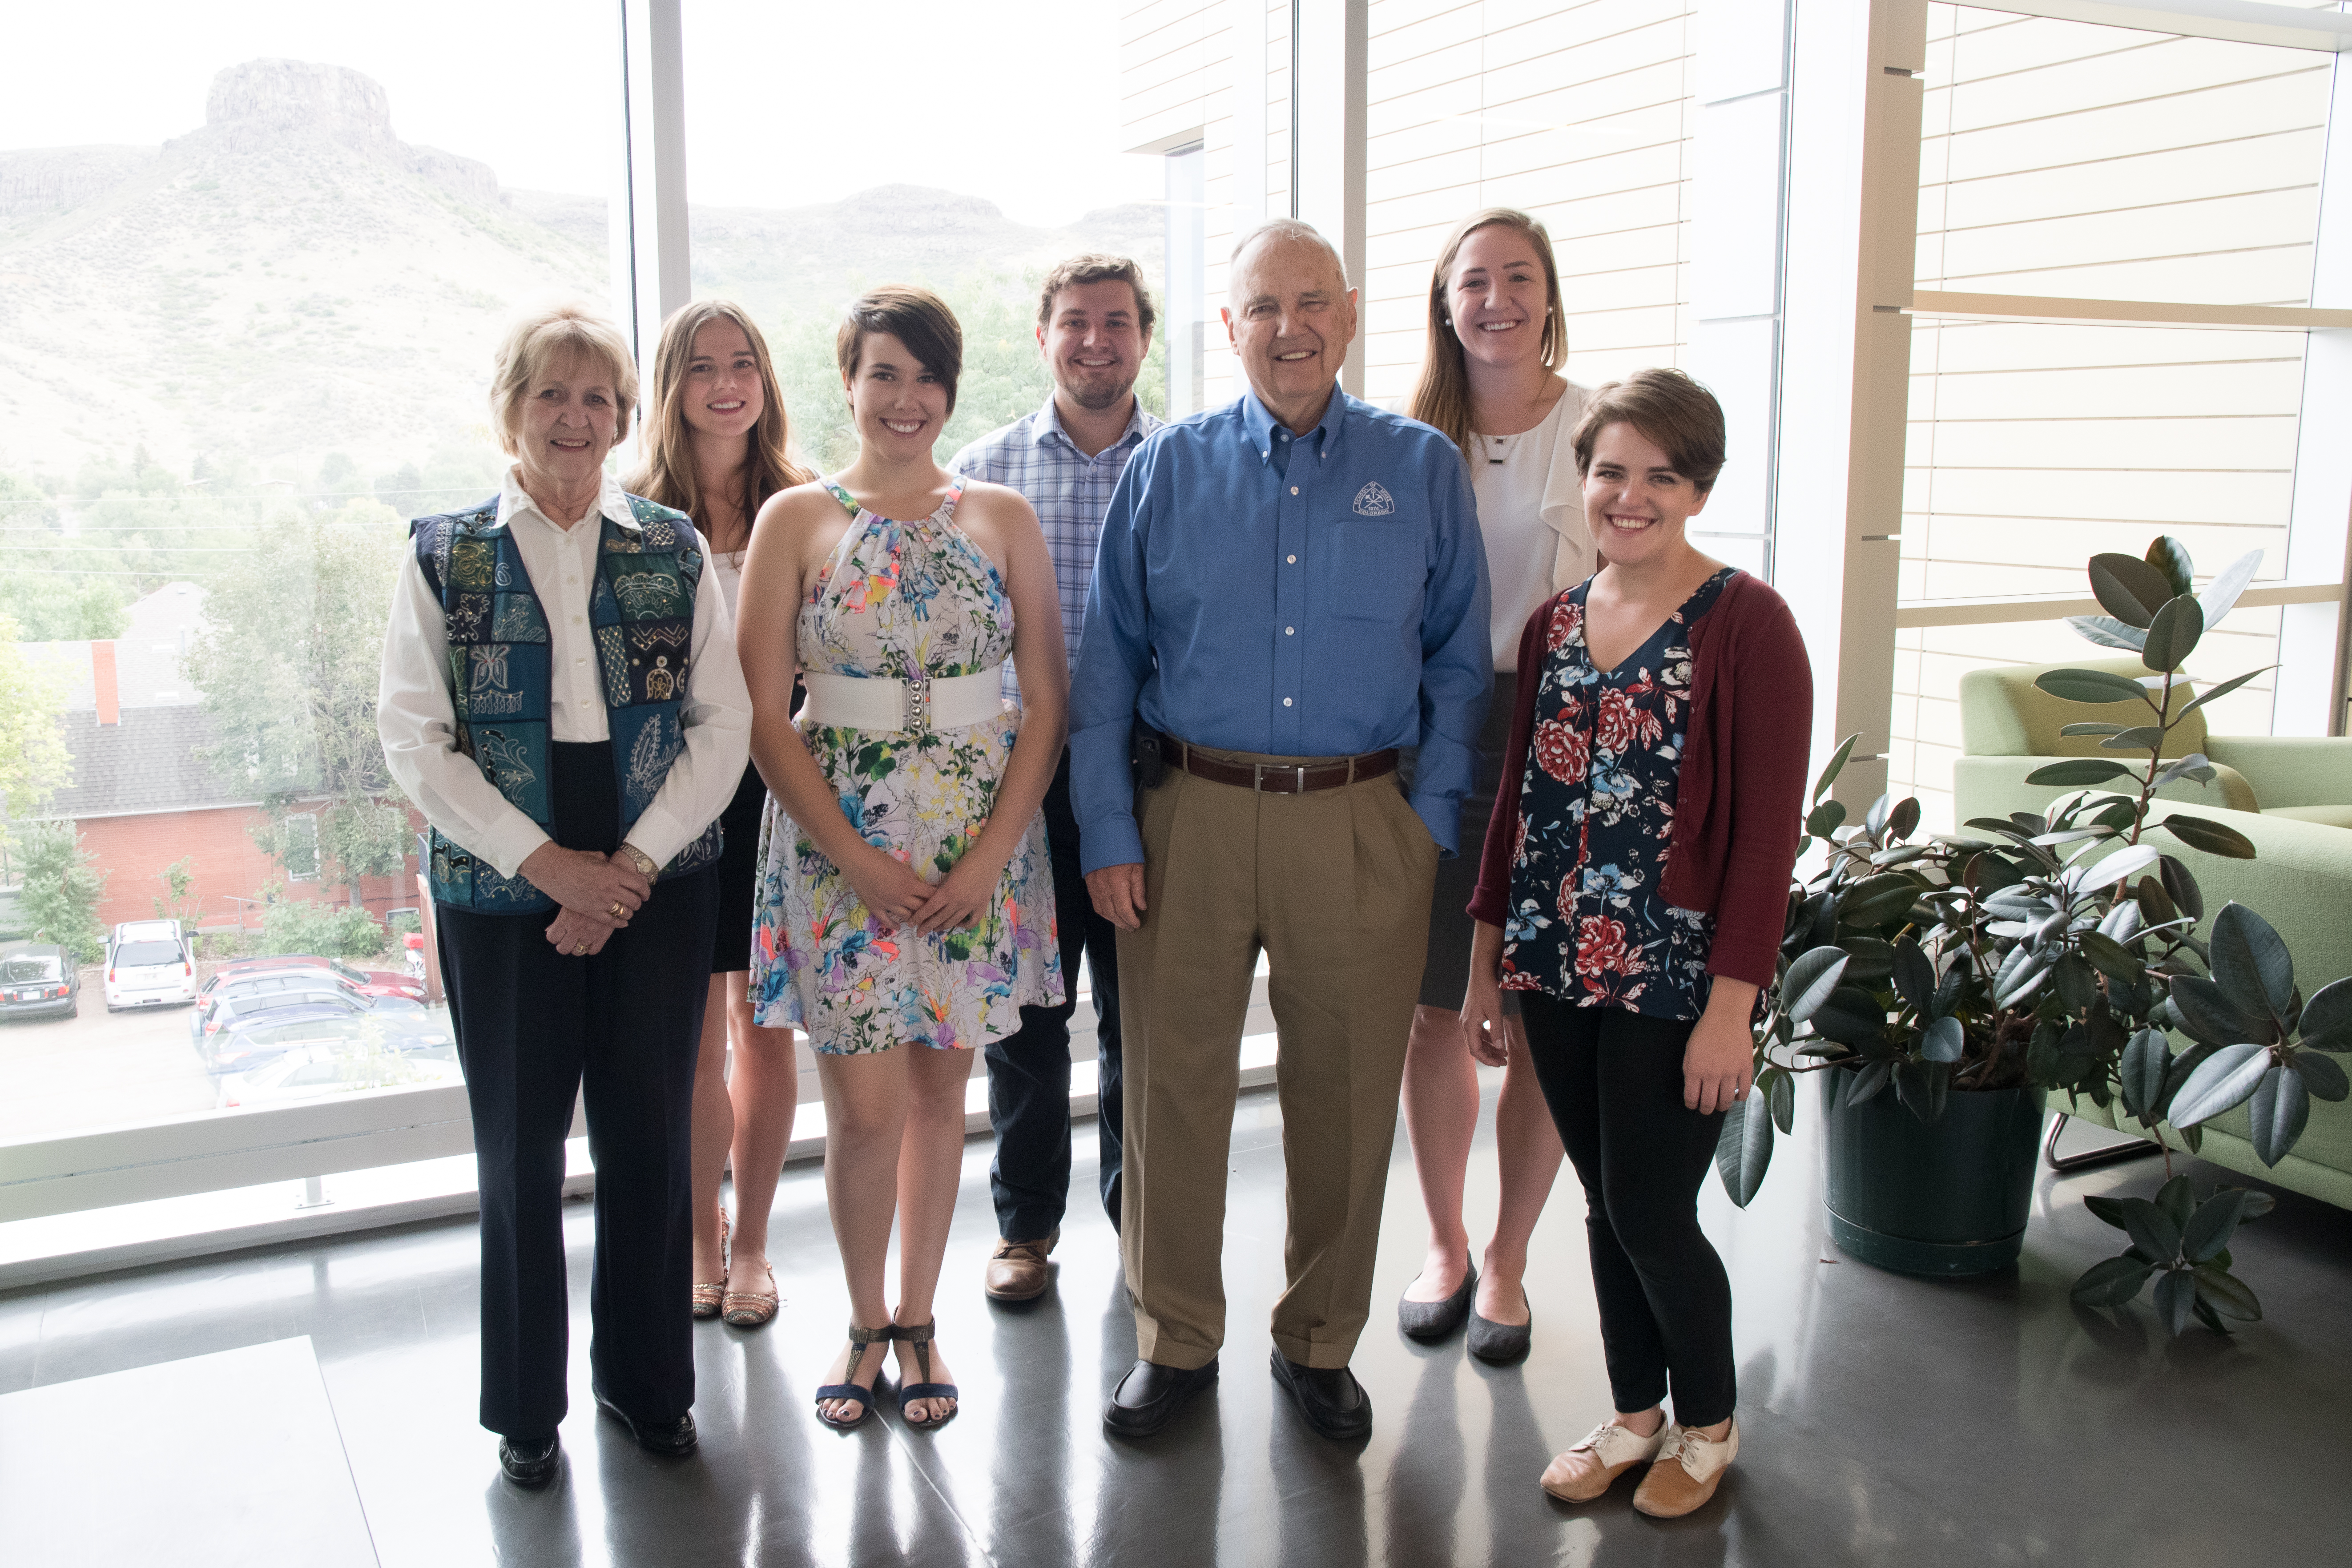 The 2017-2018 Shultz Humanitarian Engineering Scholars at Colorado School of Mines